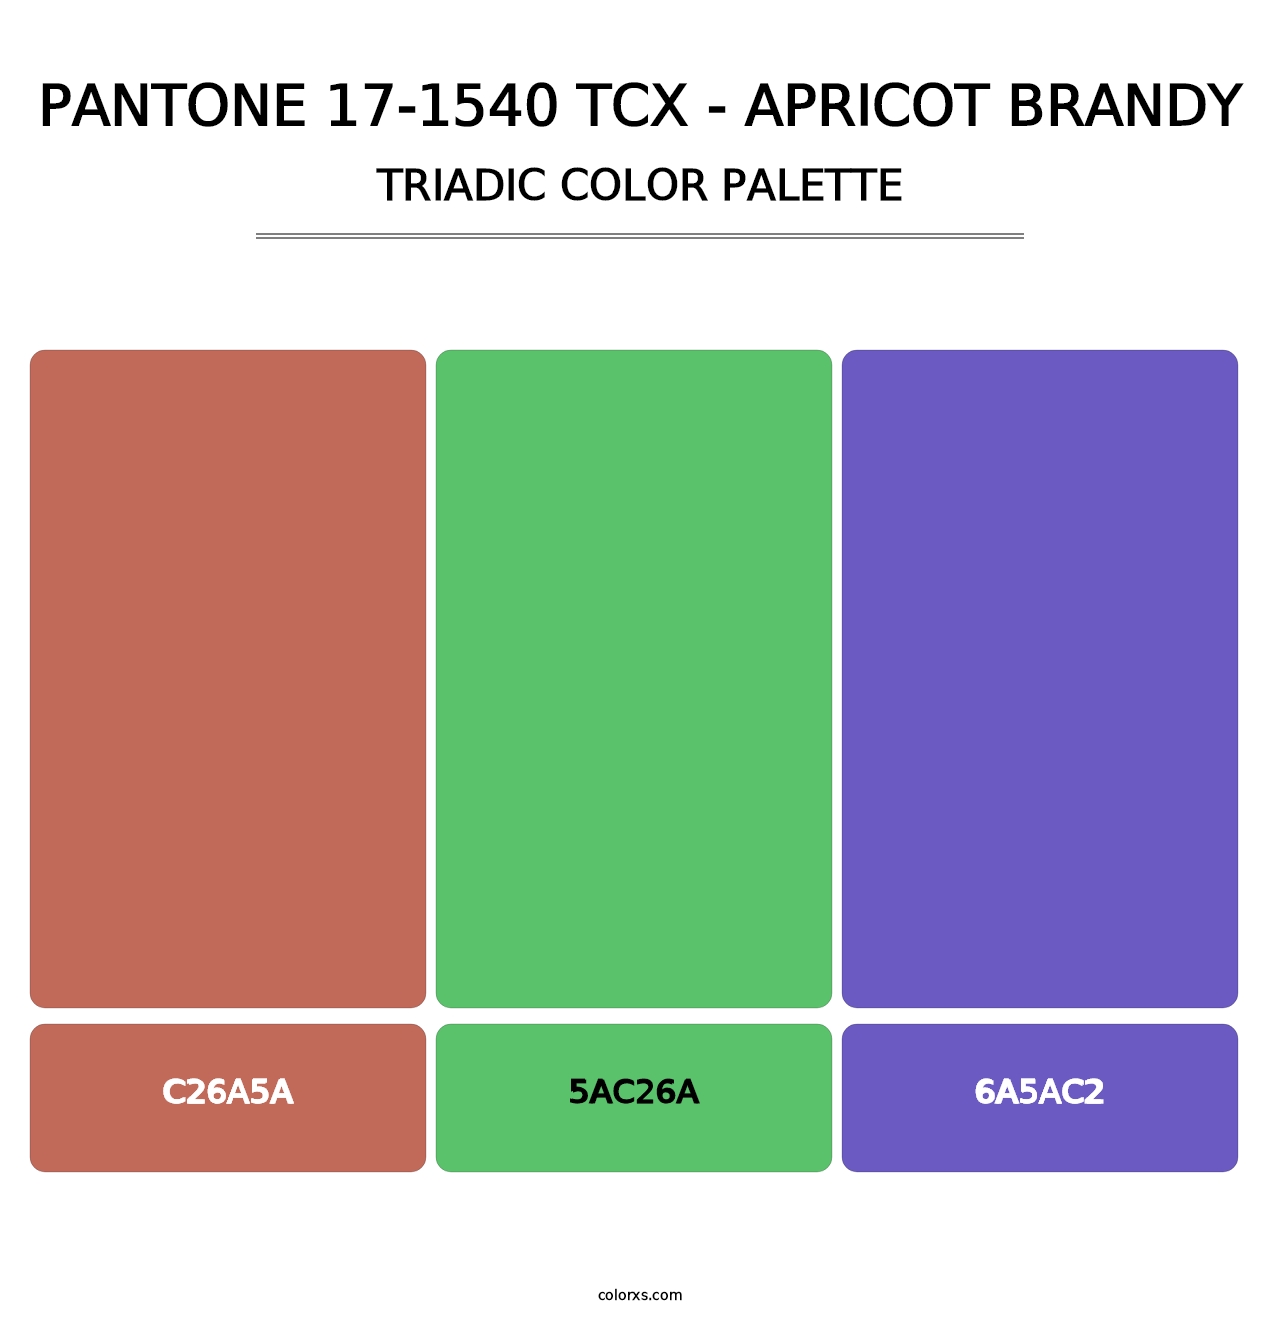 PANTONE 17-1540 TCX - Apricot Brandy - Triadic Color Palette